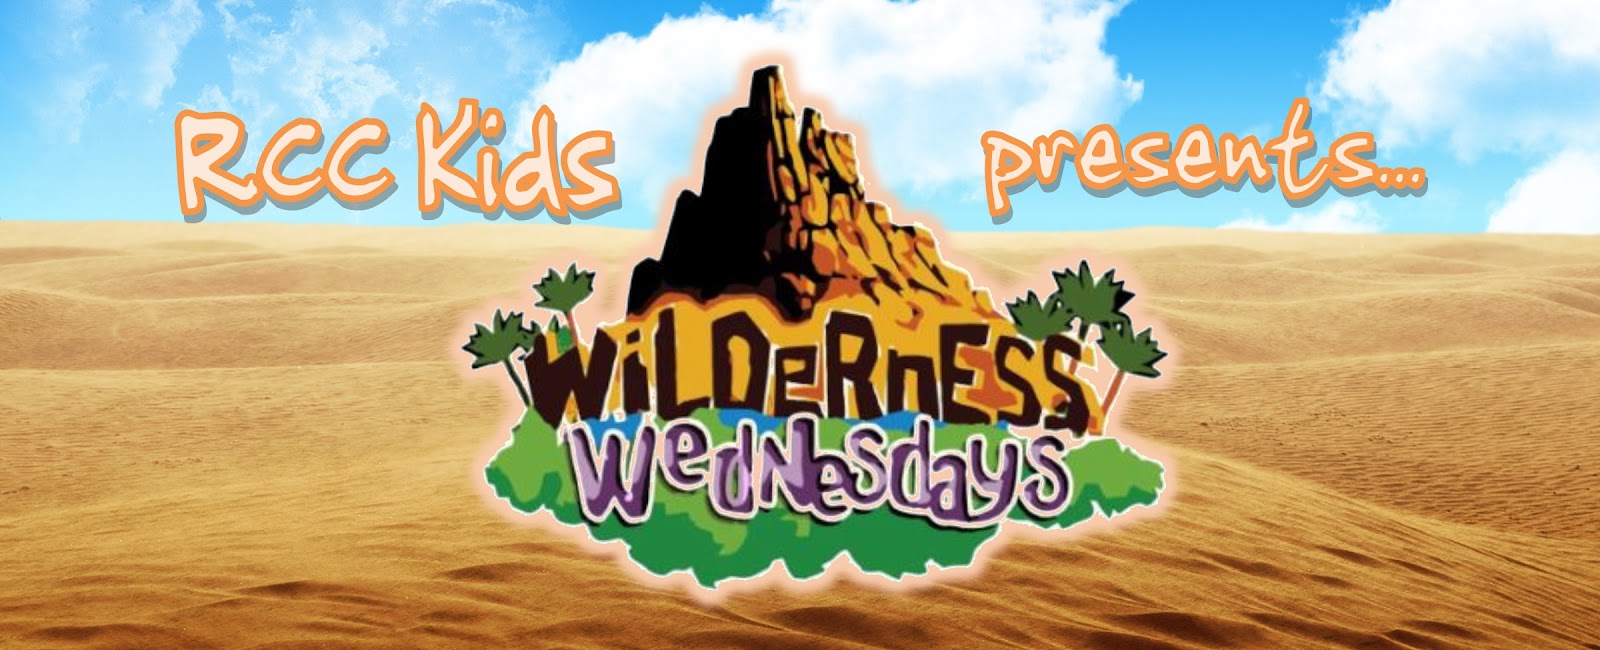 Wilderness Wednesdays